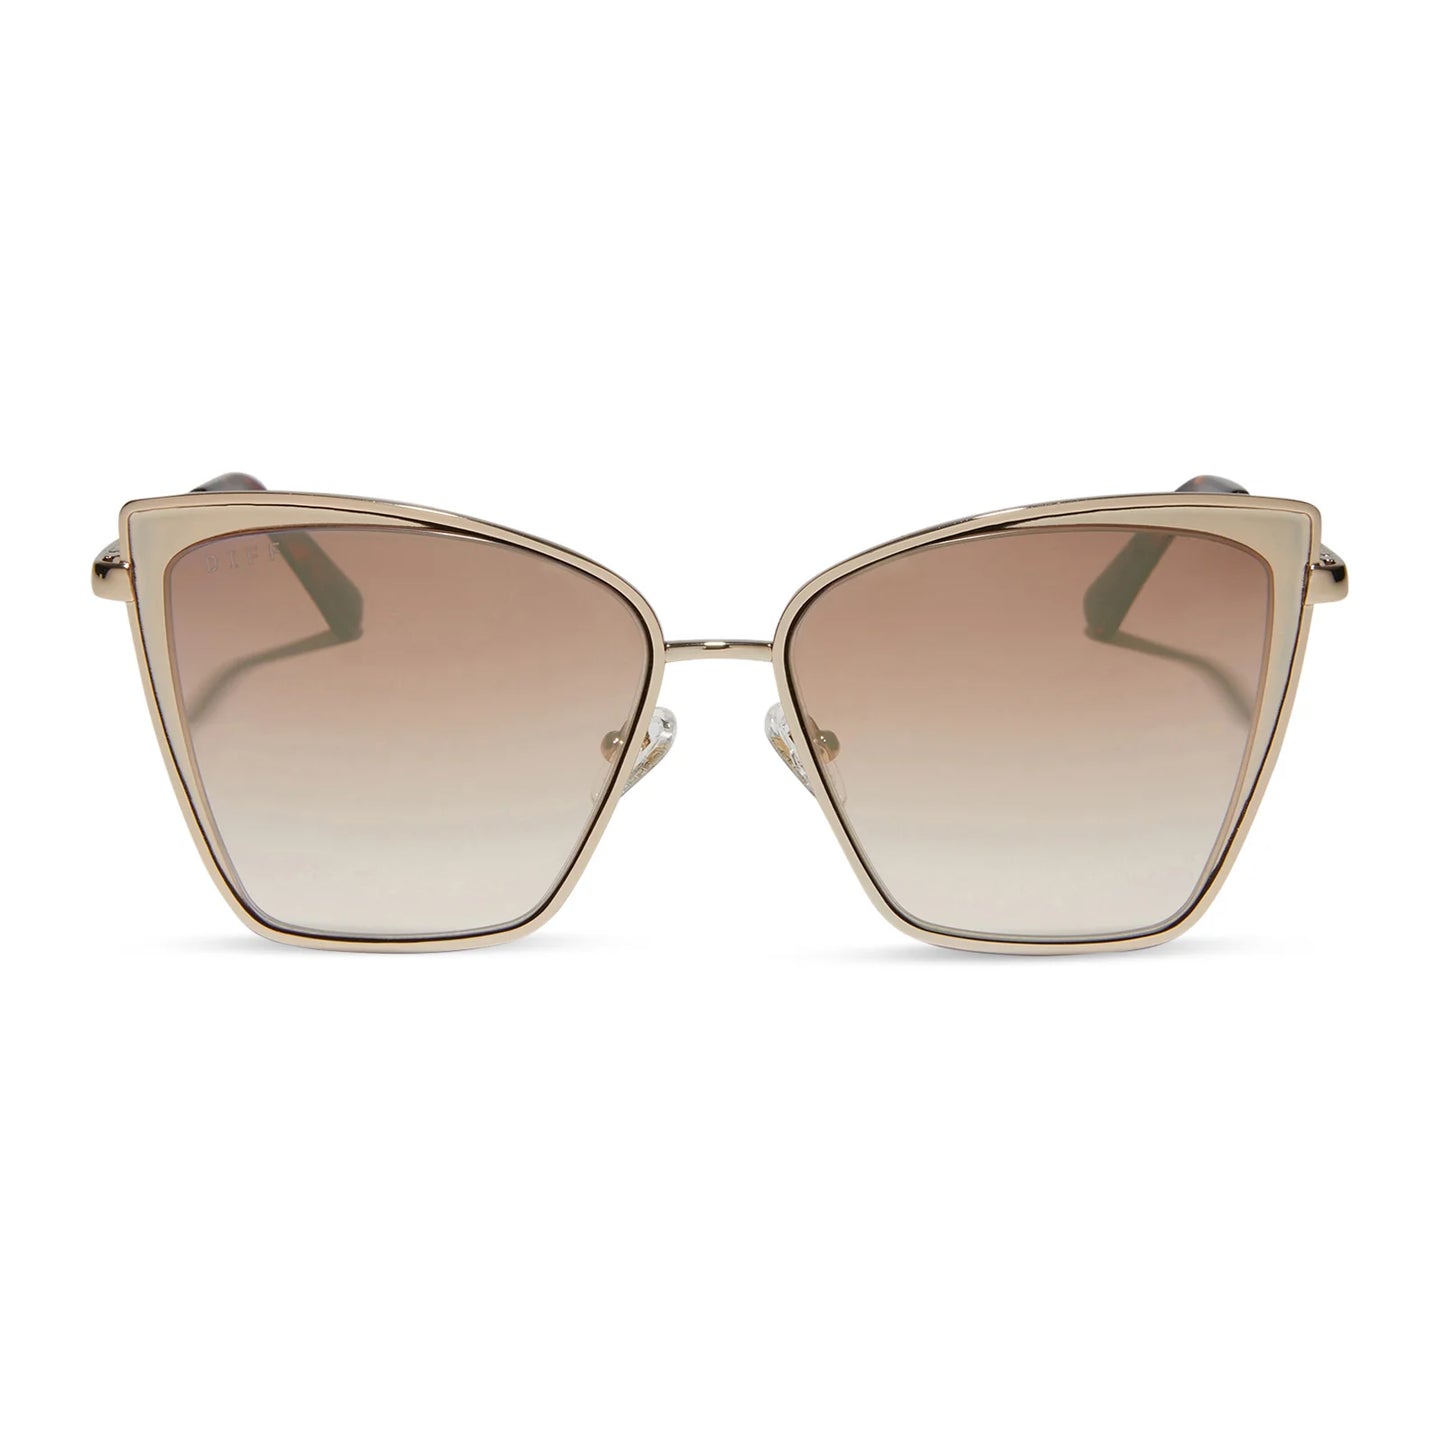 DIFF Eyewear - Becky - Gold Flash Brown Gradient Sunglasses